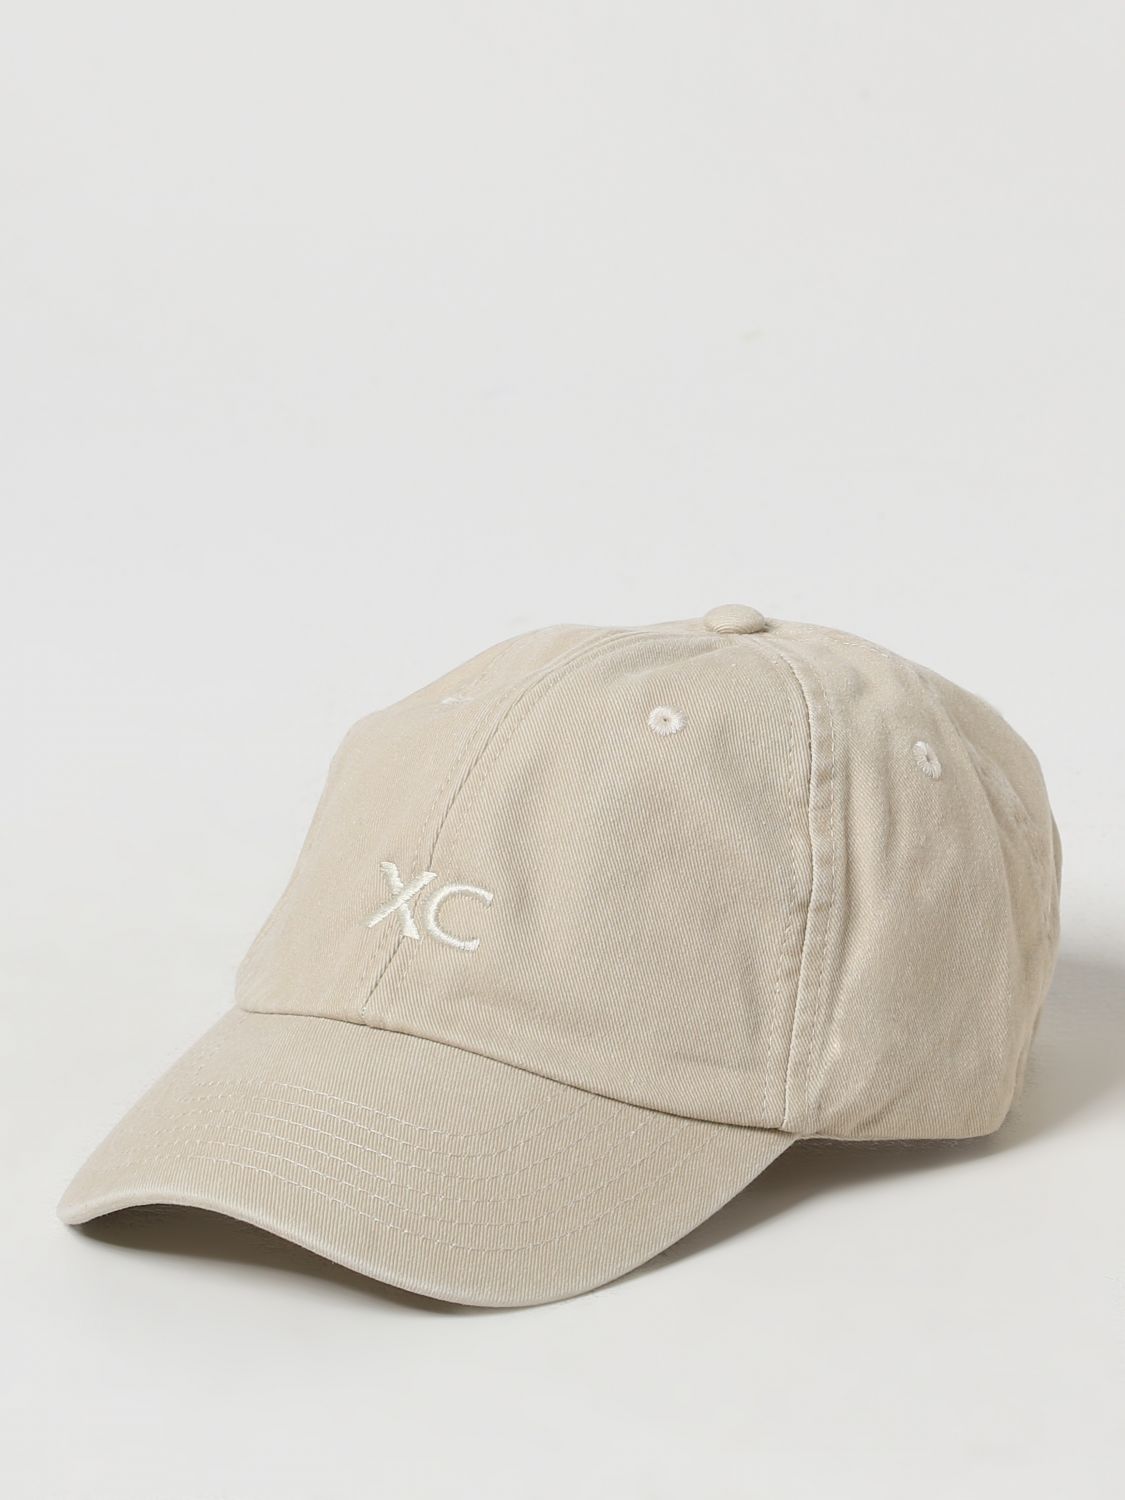 Xc Hat XC Men color Natural